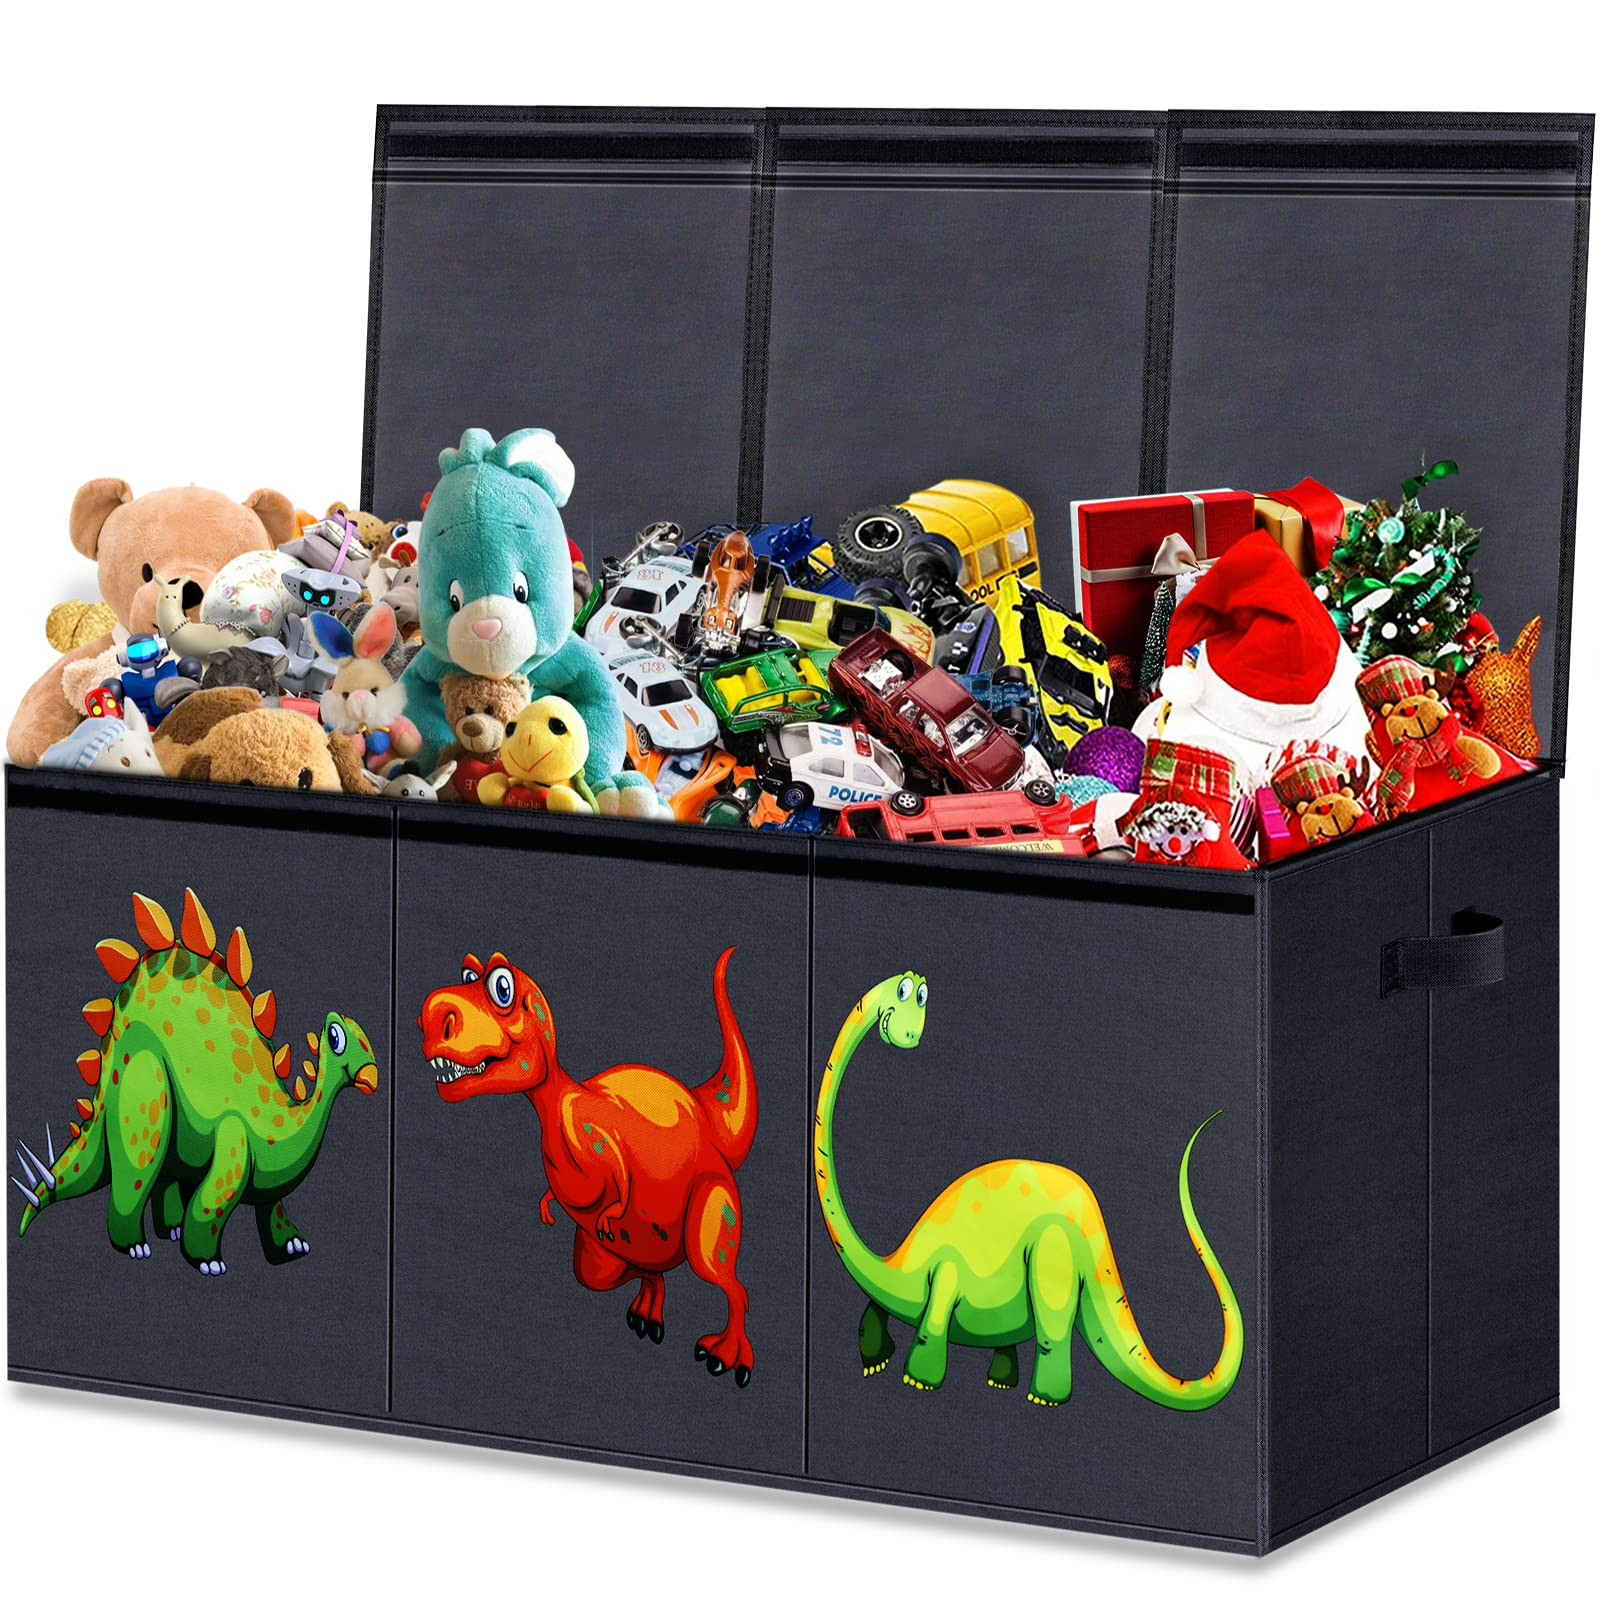 Toy Storage Chest, Large Kids Toy Box Chest Storage with Lids,40.6X16.5X14.2"Toy Storage Organizer,Collapsible Sturdy Storage Bins Organizer for Nursery Room, Playroom,Closet,Home Organization,School